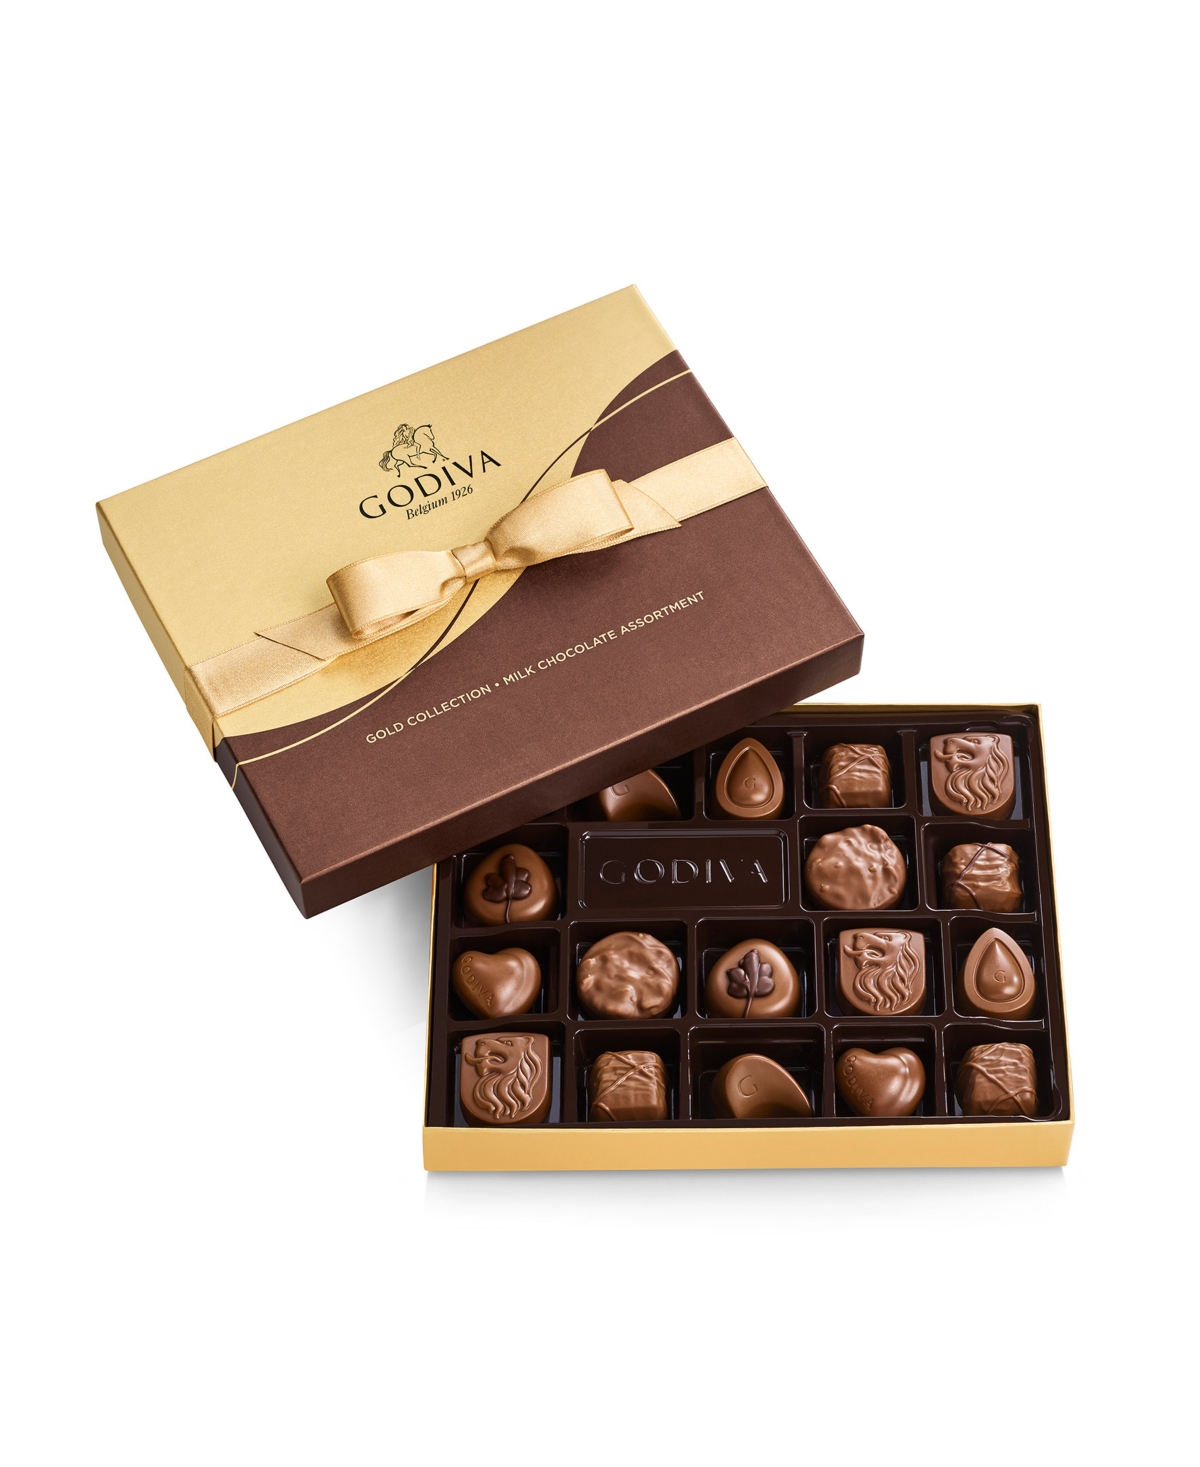 Godiva Chocolatier Assorted Milk Chocolate Gold-tone Gift Box, 18 Piece In No Color